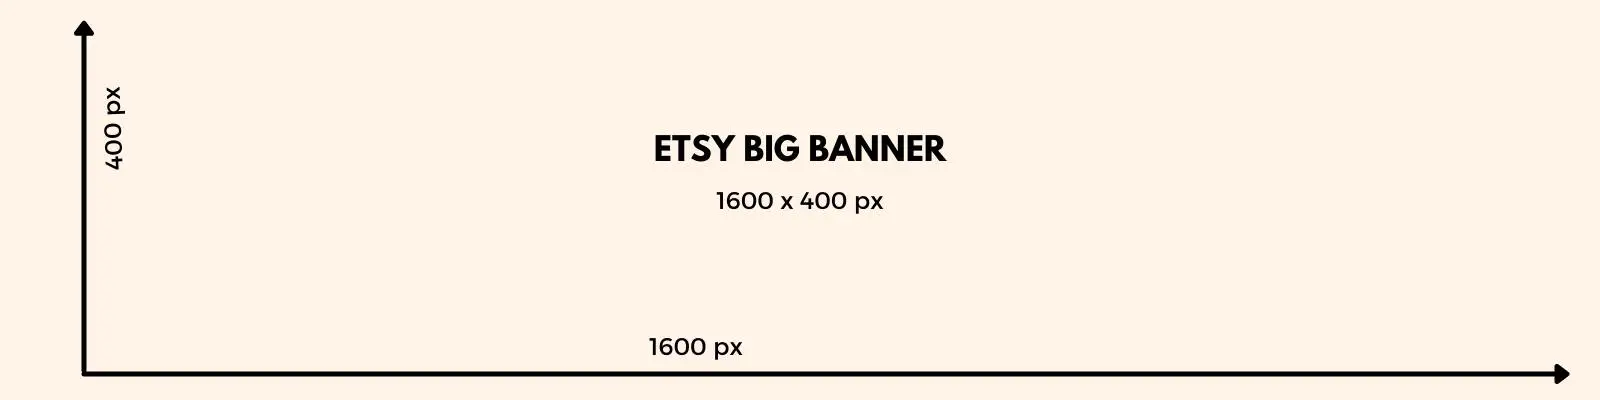 Etsy big banner size ( Etsy cover photo size)